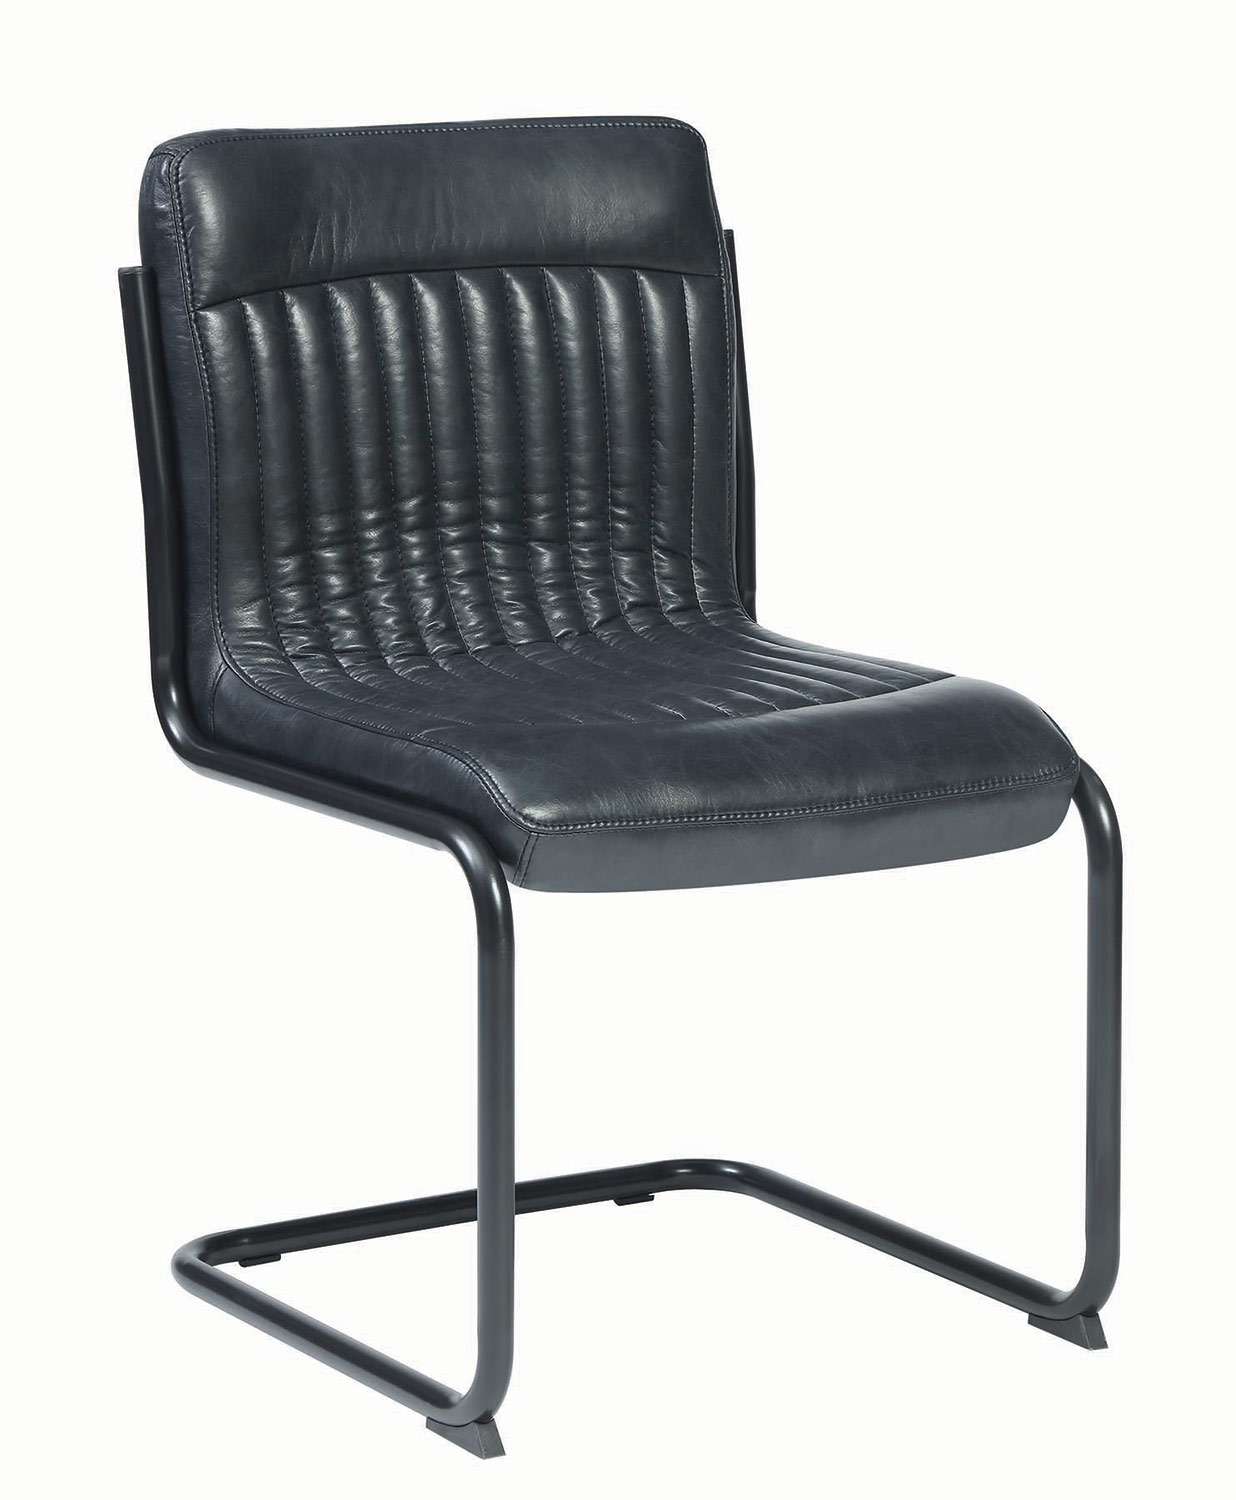 Coaster Chambler Dining Side Chair - Dark Grey Leatherette